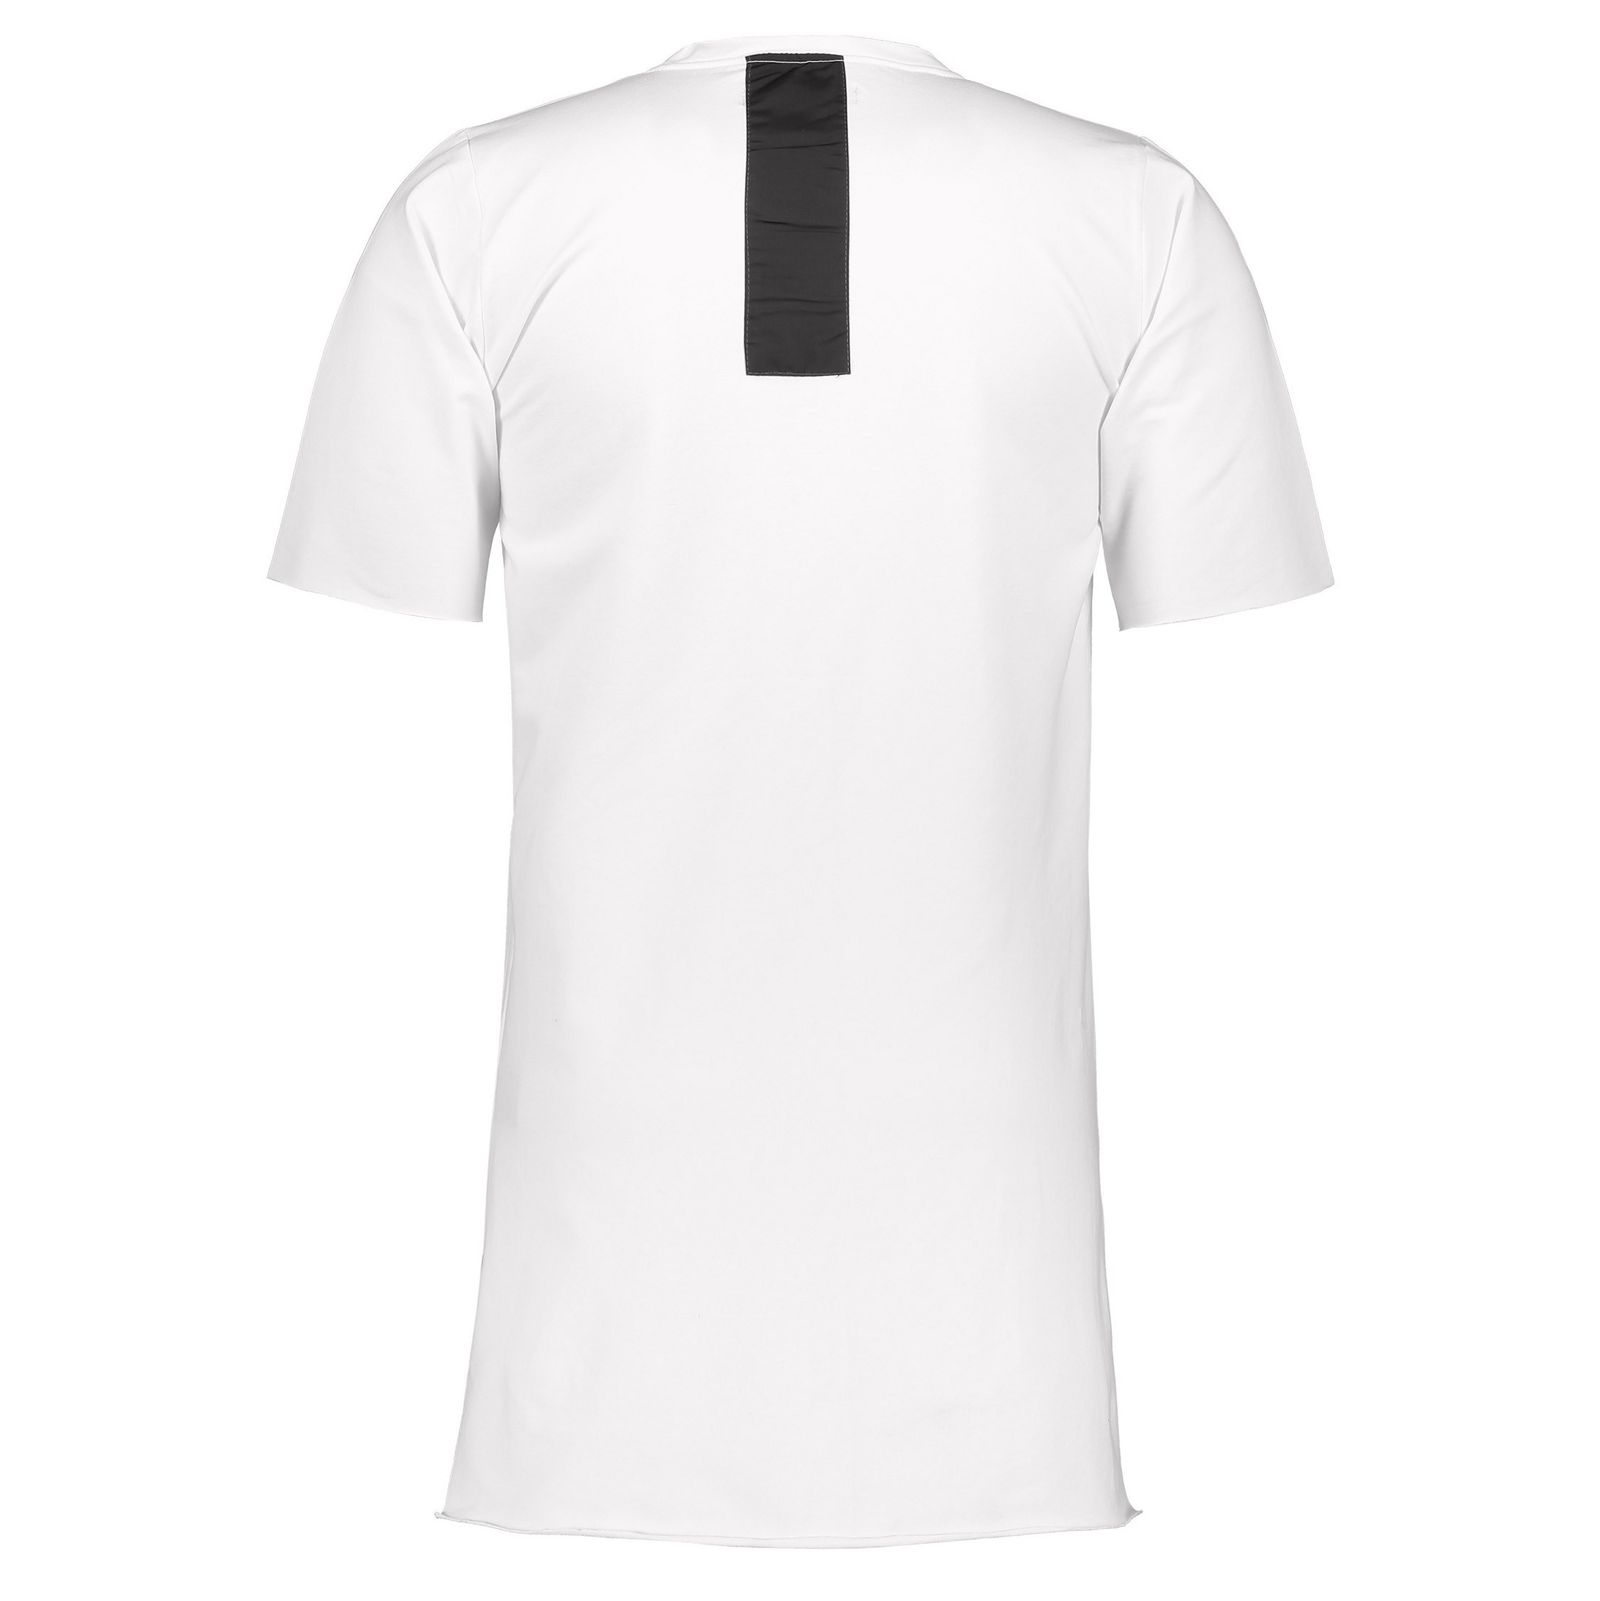 تی شرت ویسکوز یقه گرد مردانه Memory - یونیتی - سفيد - 3